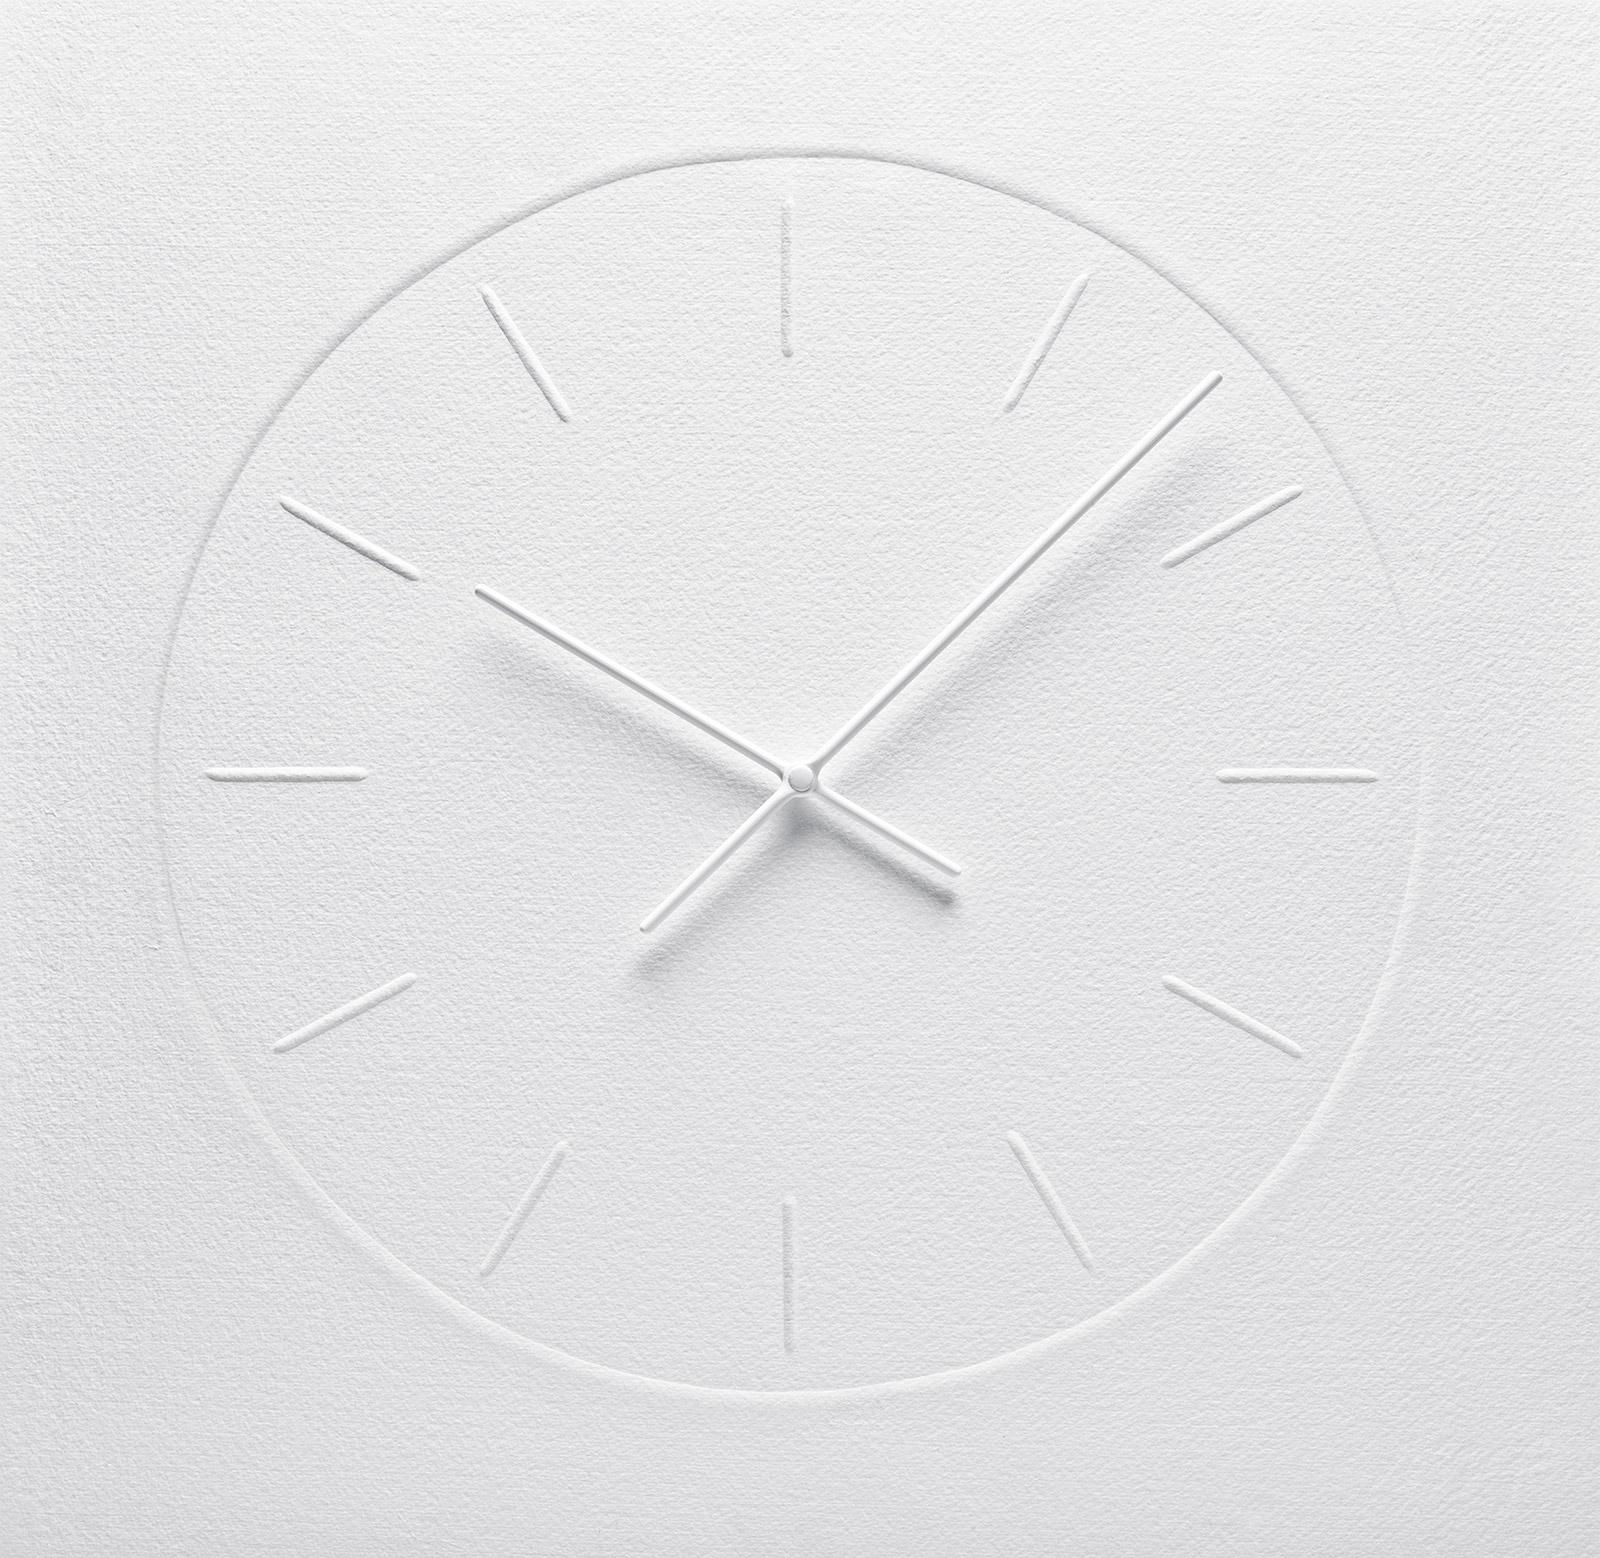 Wall clock | Mia Lagerman